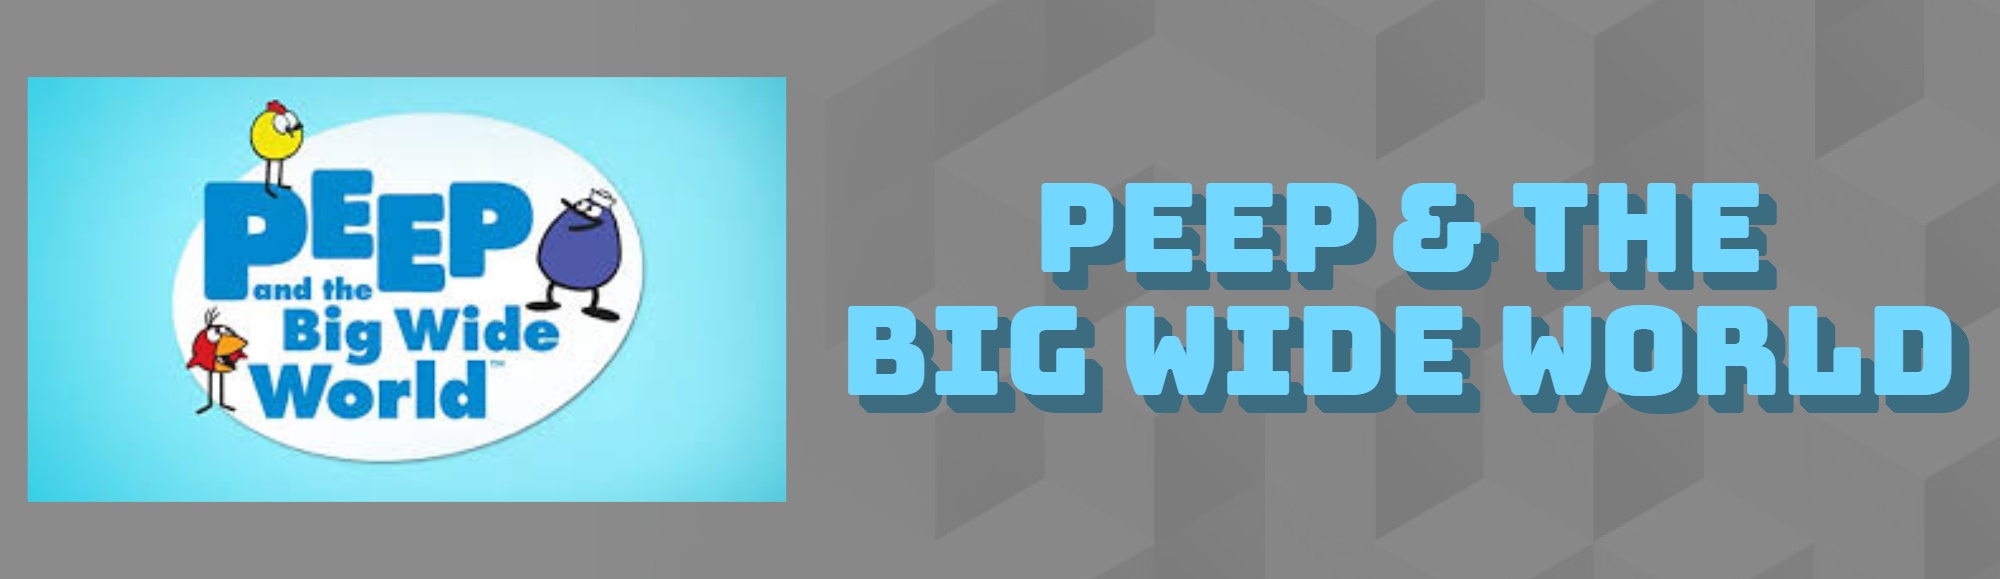 PEEP & THE BIG WIDE WORLD